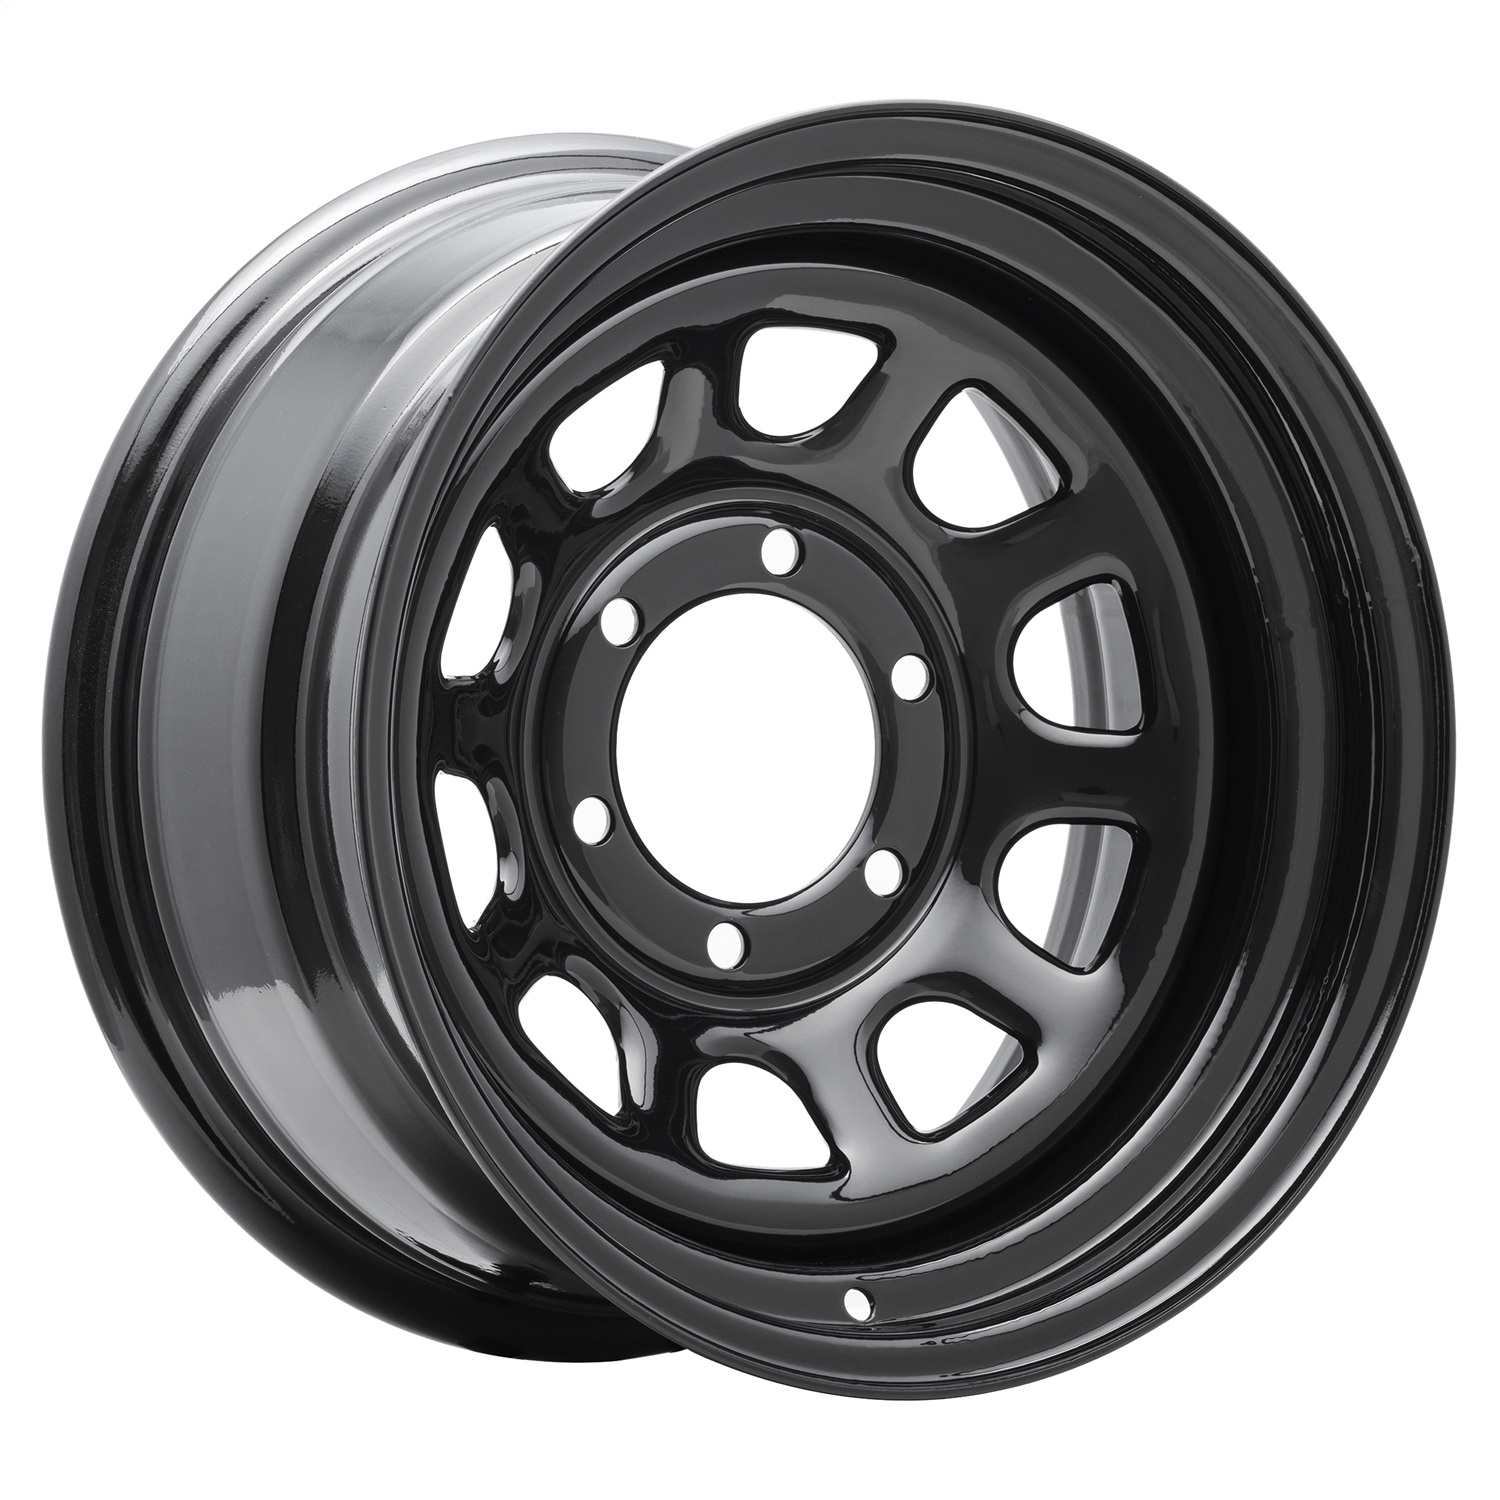 Pro Comp Wheels 51-5883 Rock Crawler Series 51 Black Wheel